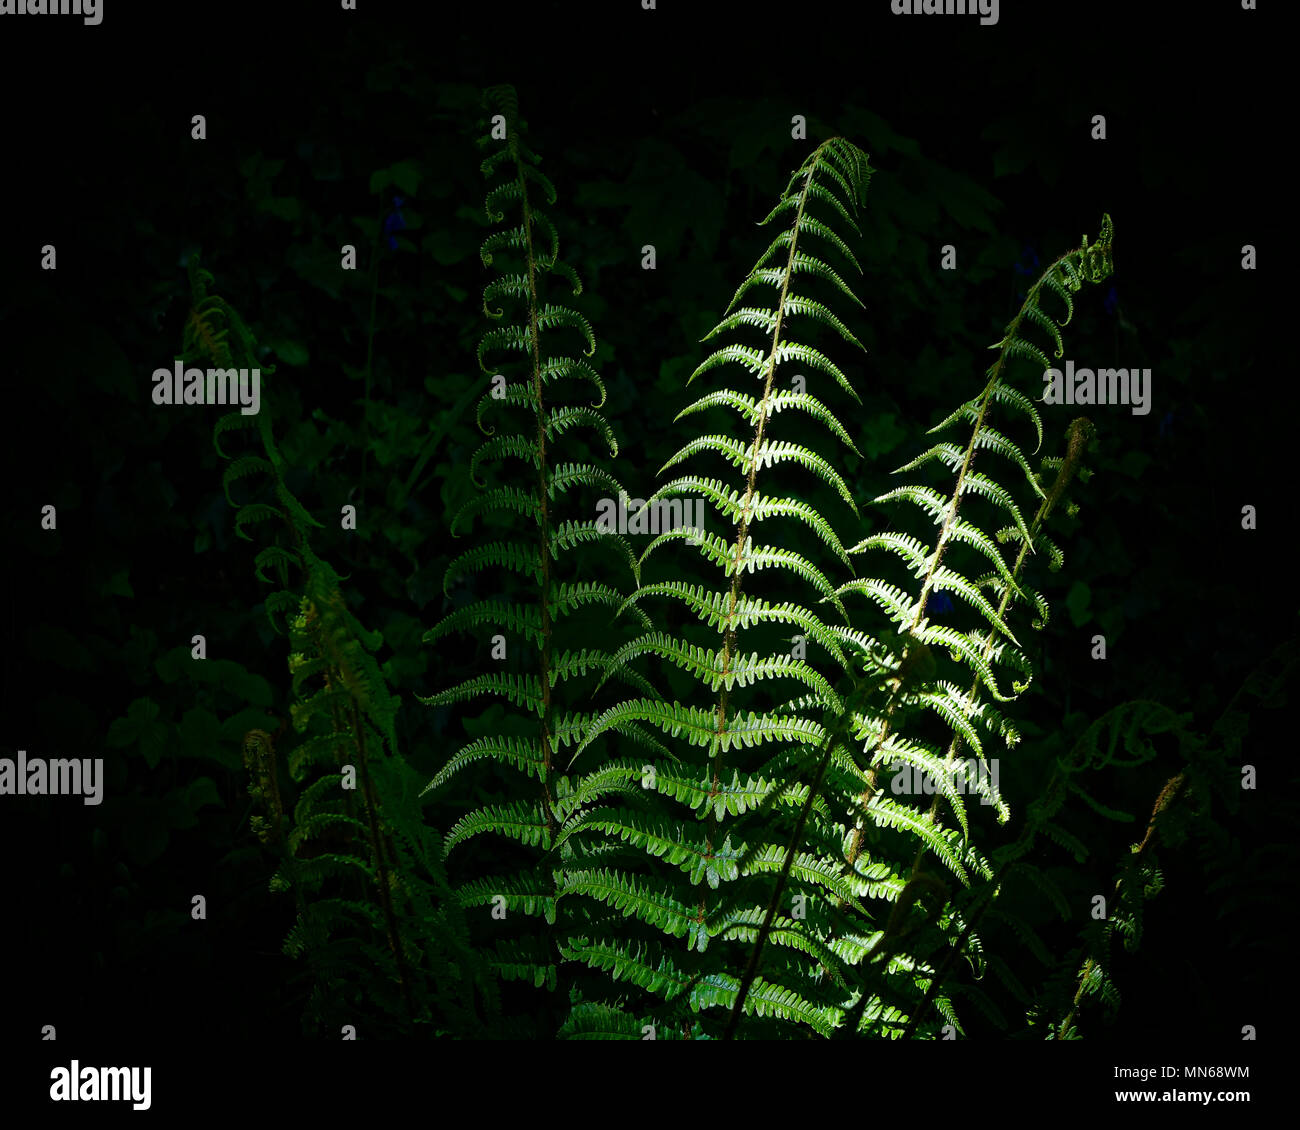 VASCULAR PLANTS: Common Woodland Ferns  (HDR Image) Stock Photo